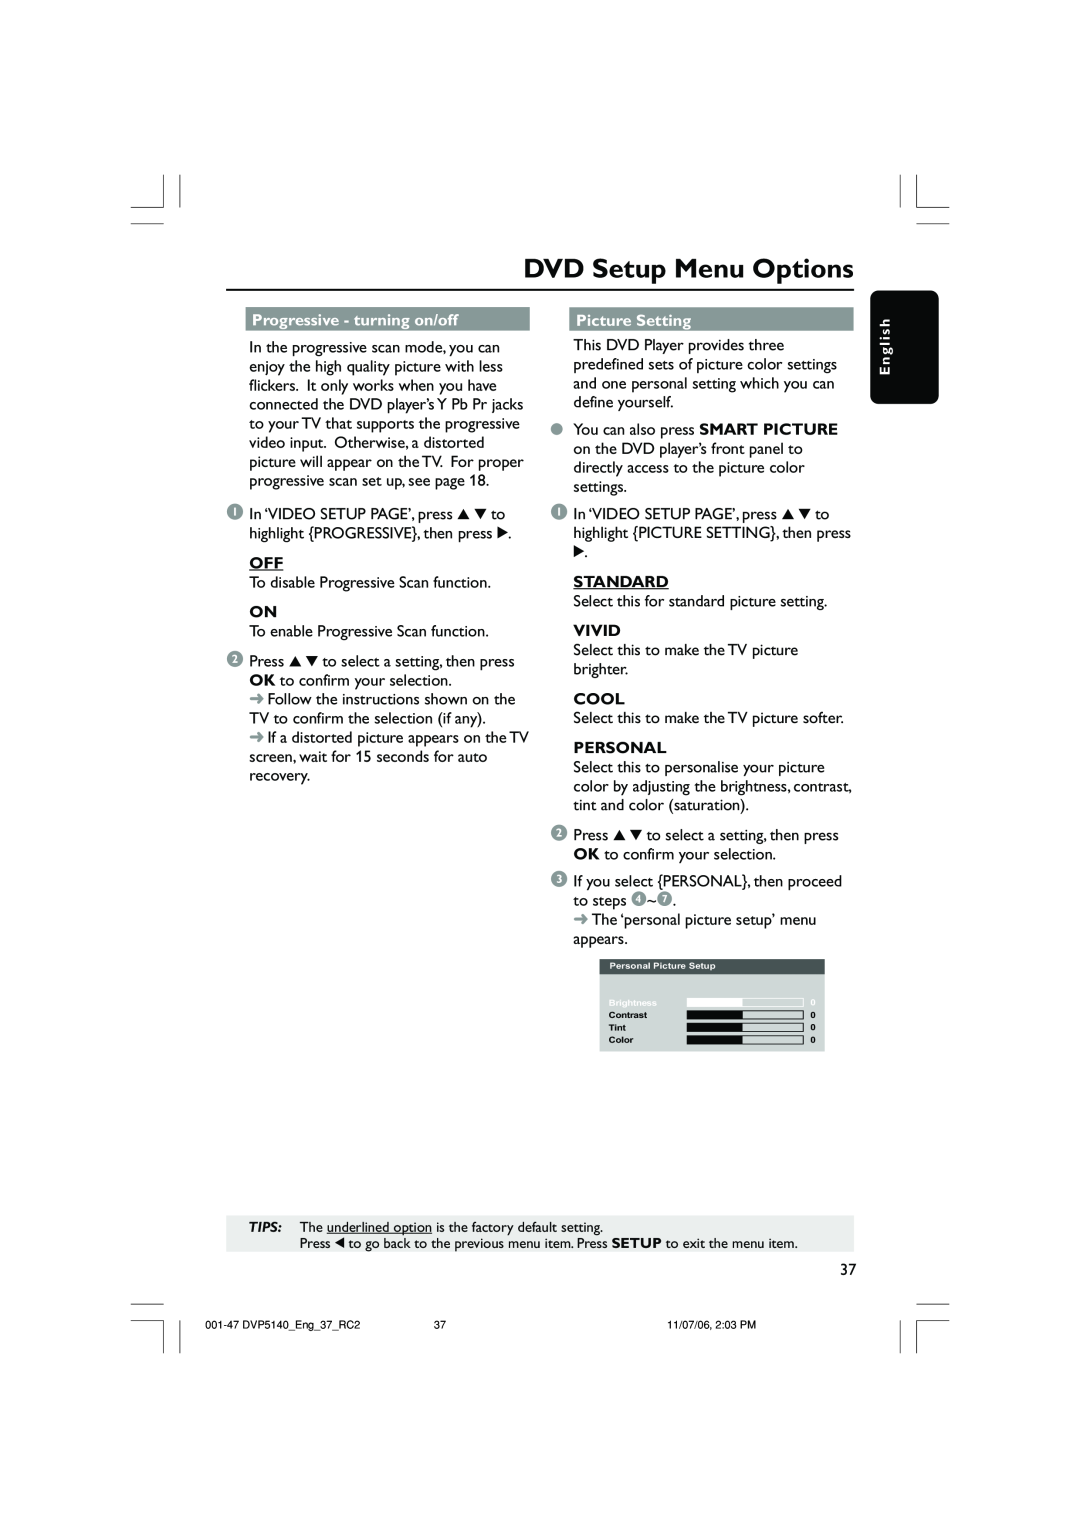 Philips DVP5140 DVD Setup Menu Options, Progressive - turning on/off, Picture Setting, Standard, Vivid, Cool, Personal 